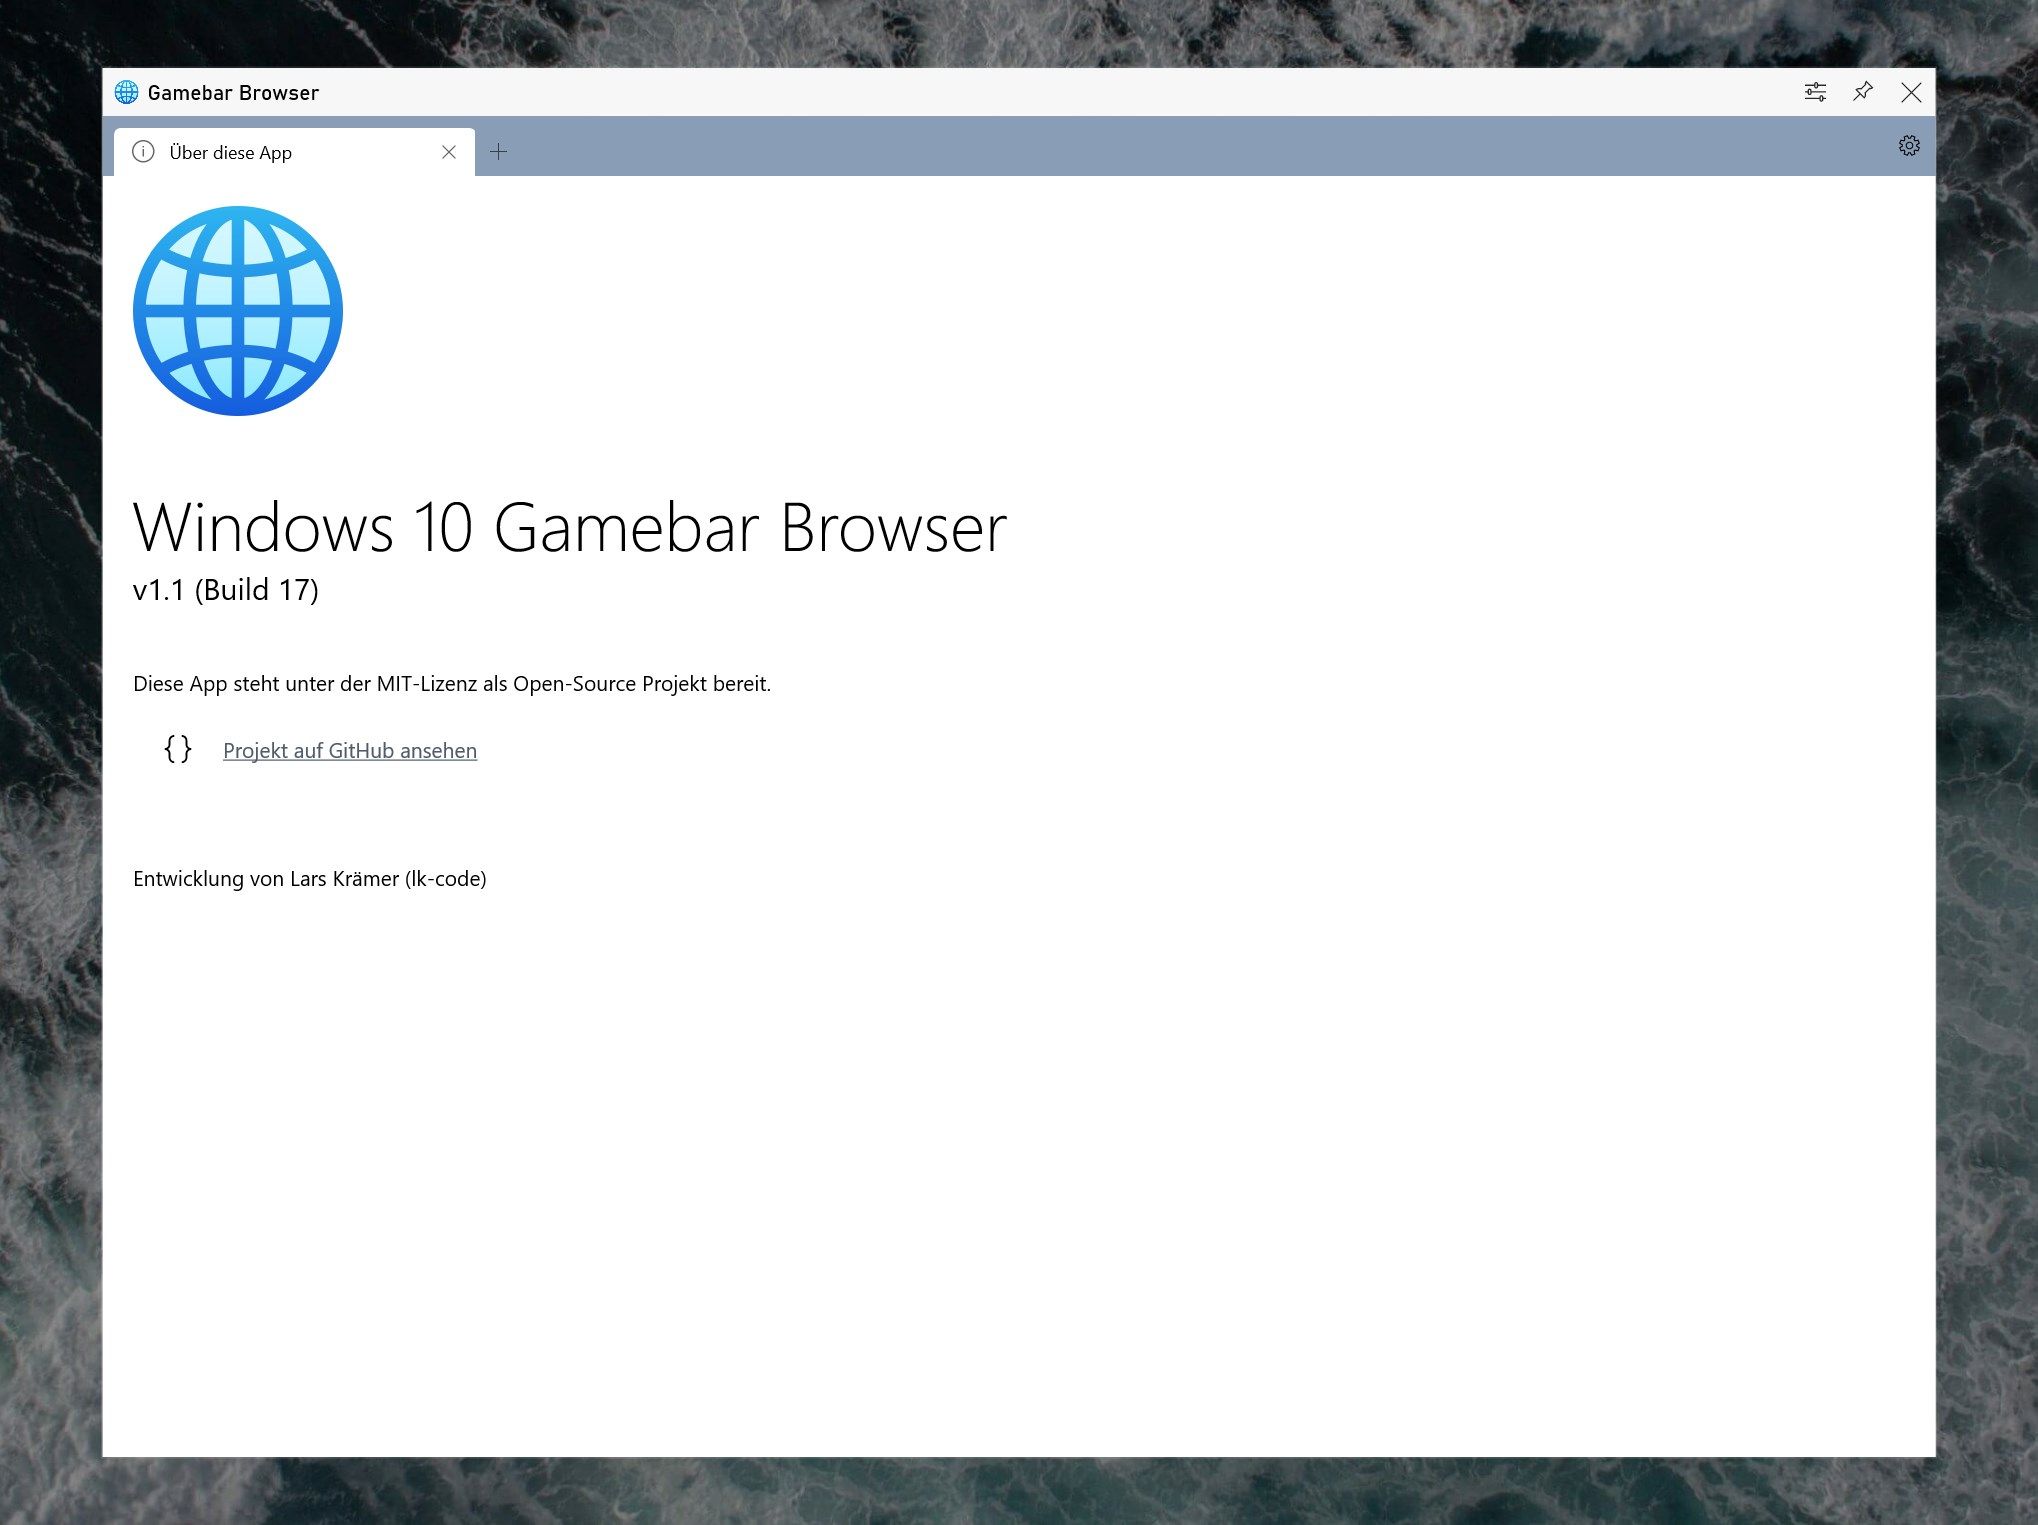 Gamebar Browser